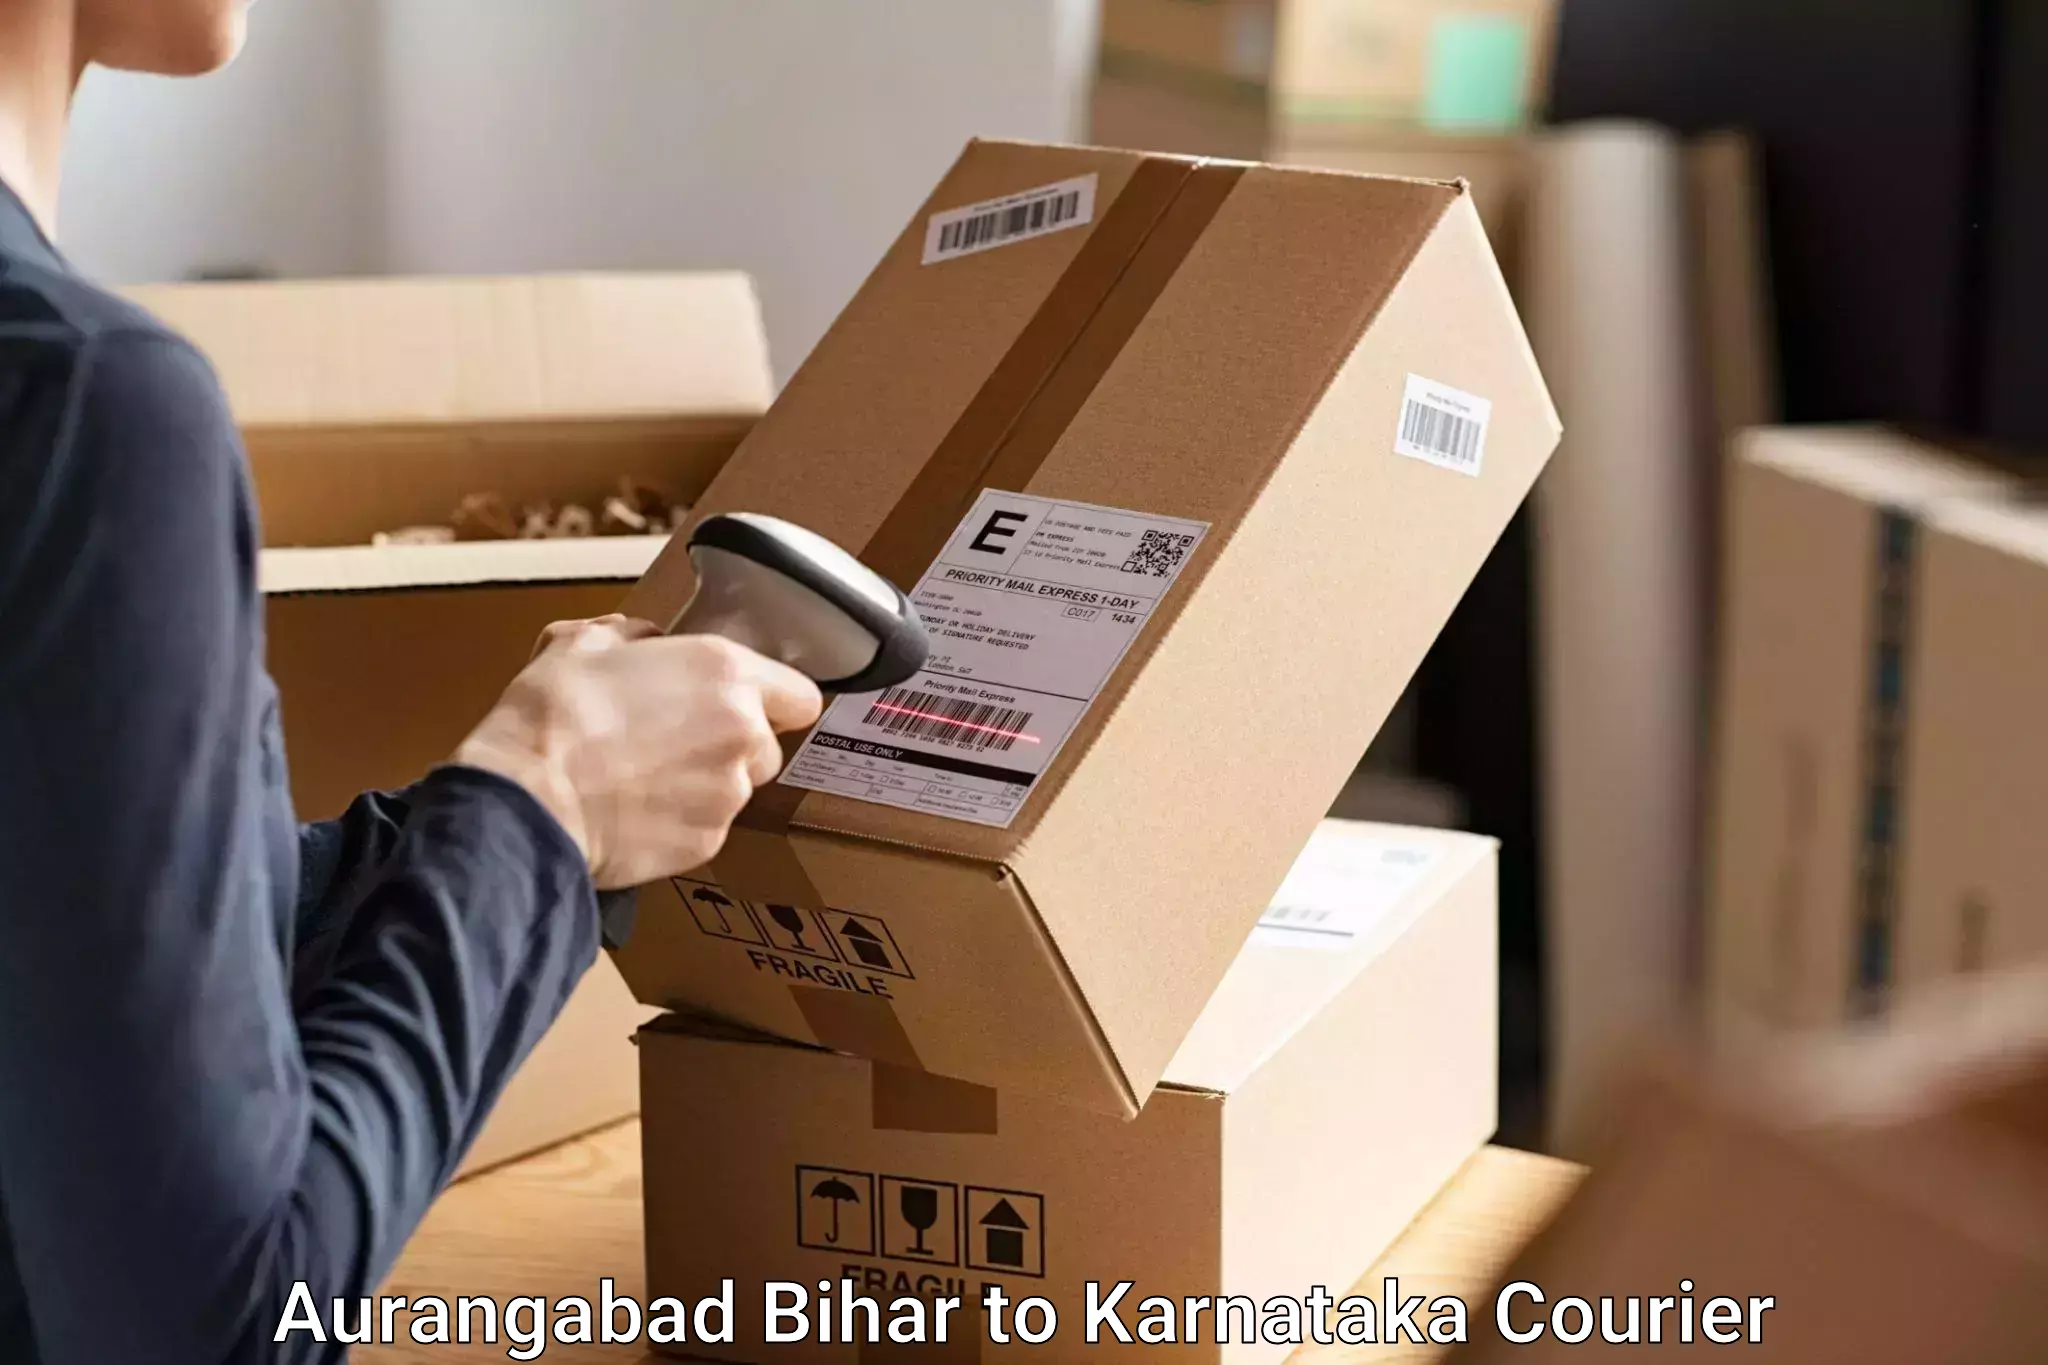 Reliable luggage courier Aurangabad Bihar to Mangalore Port